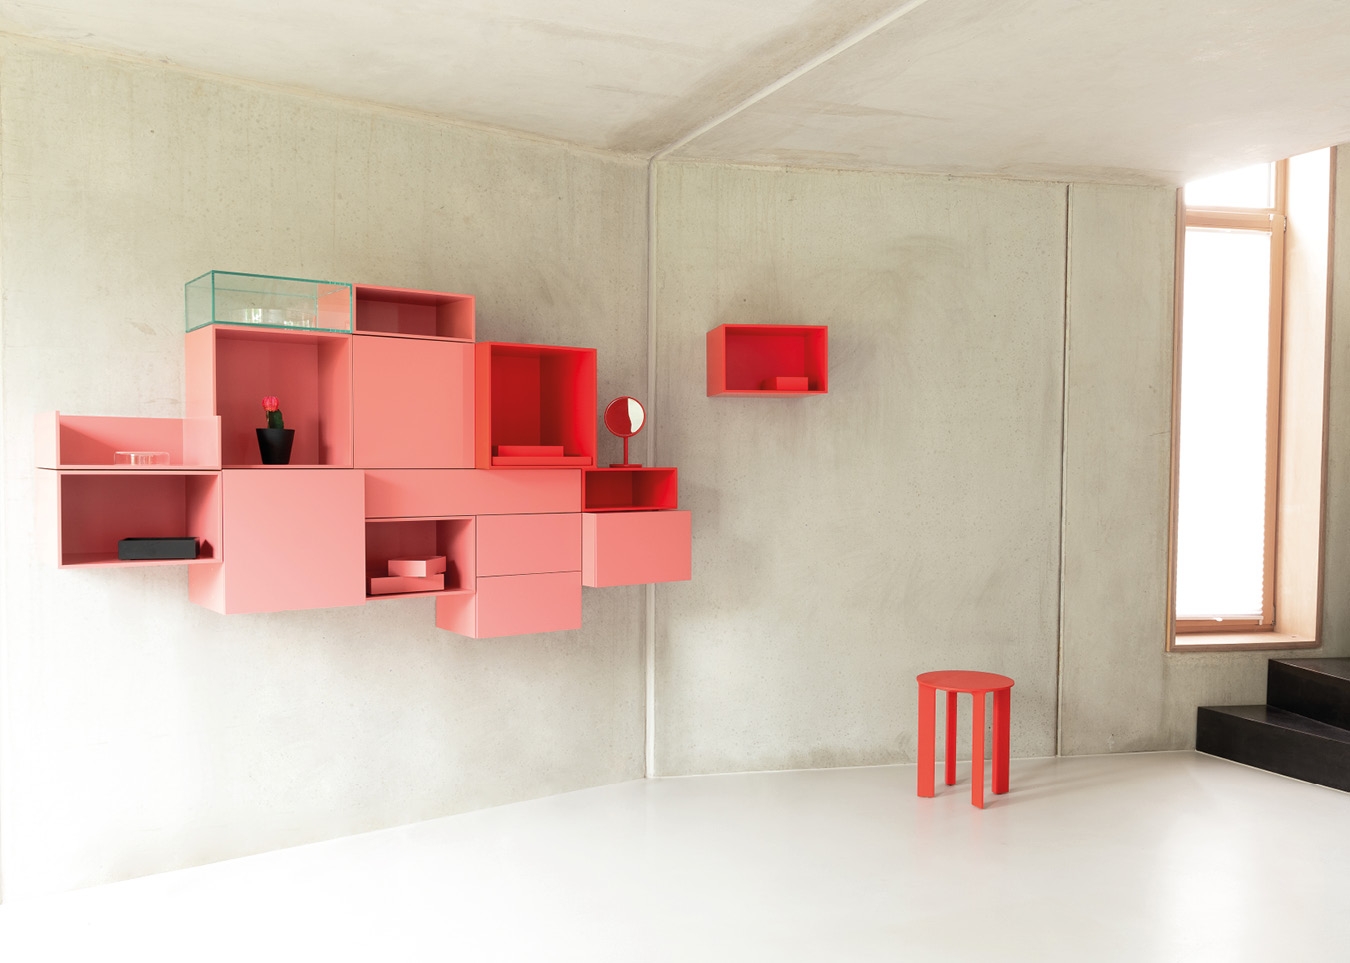 Schönbuch Designer System Cosmo Holz rosa pink funktional individuell puristisch Dante Bonuccelli 